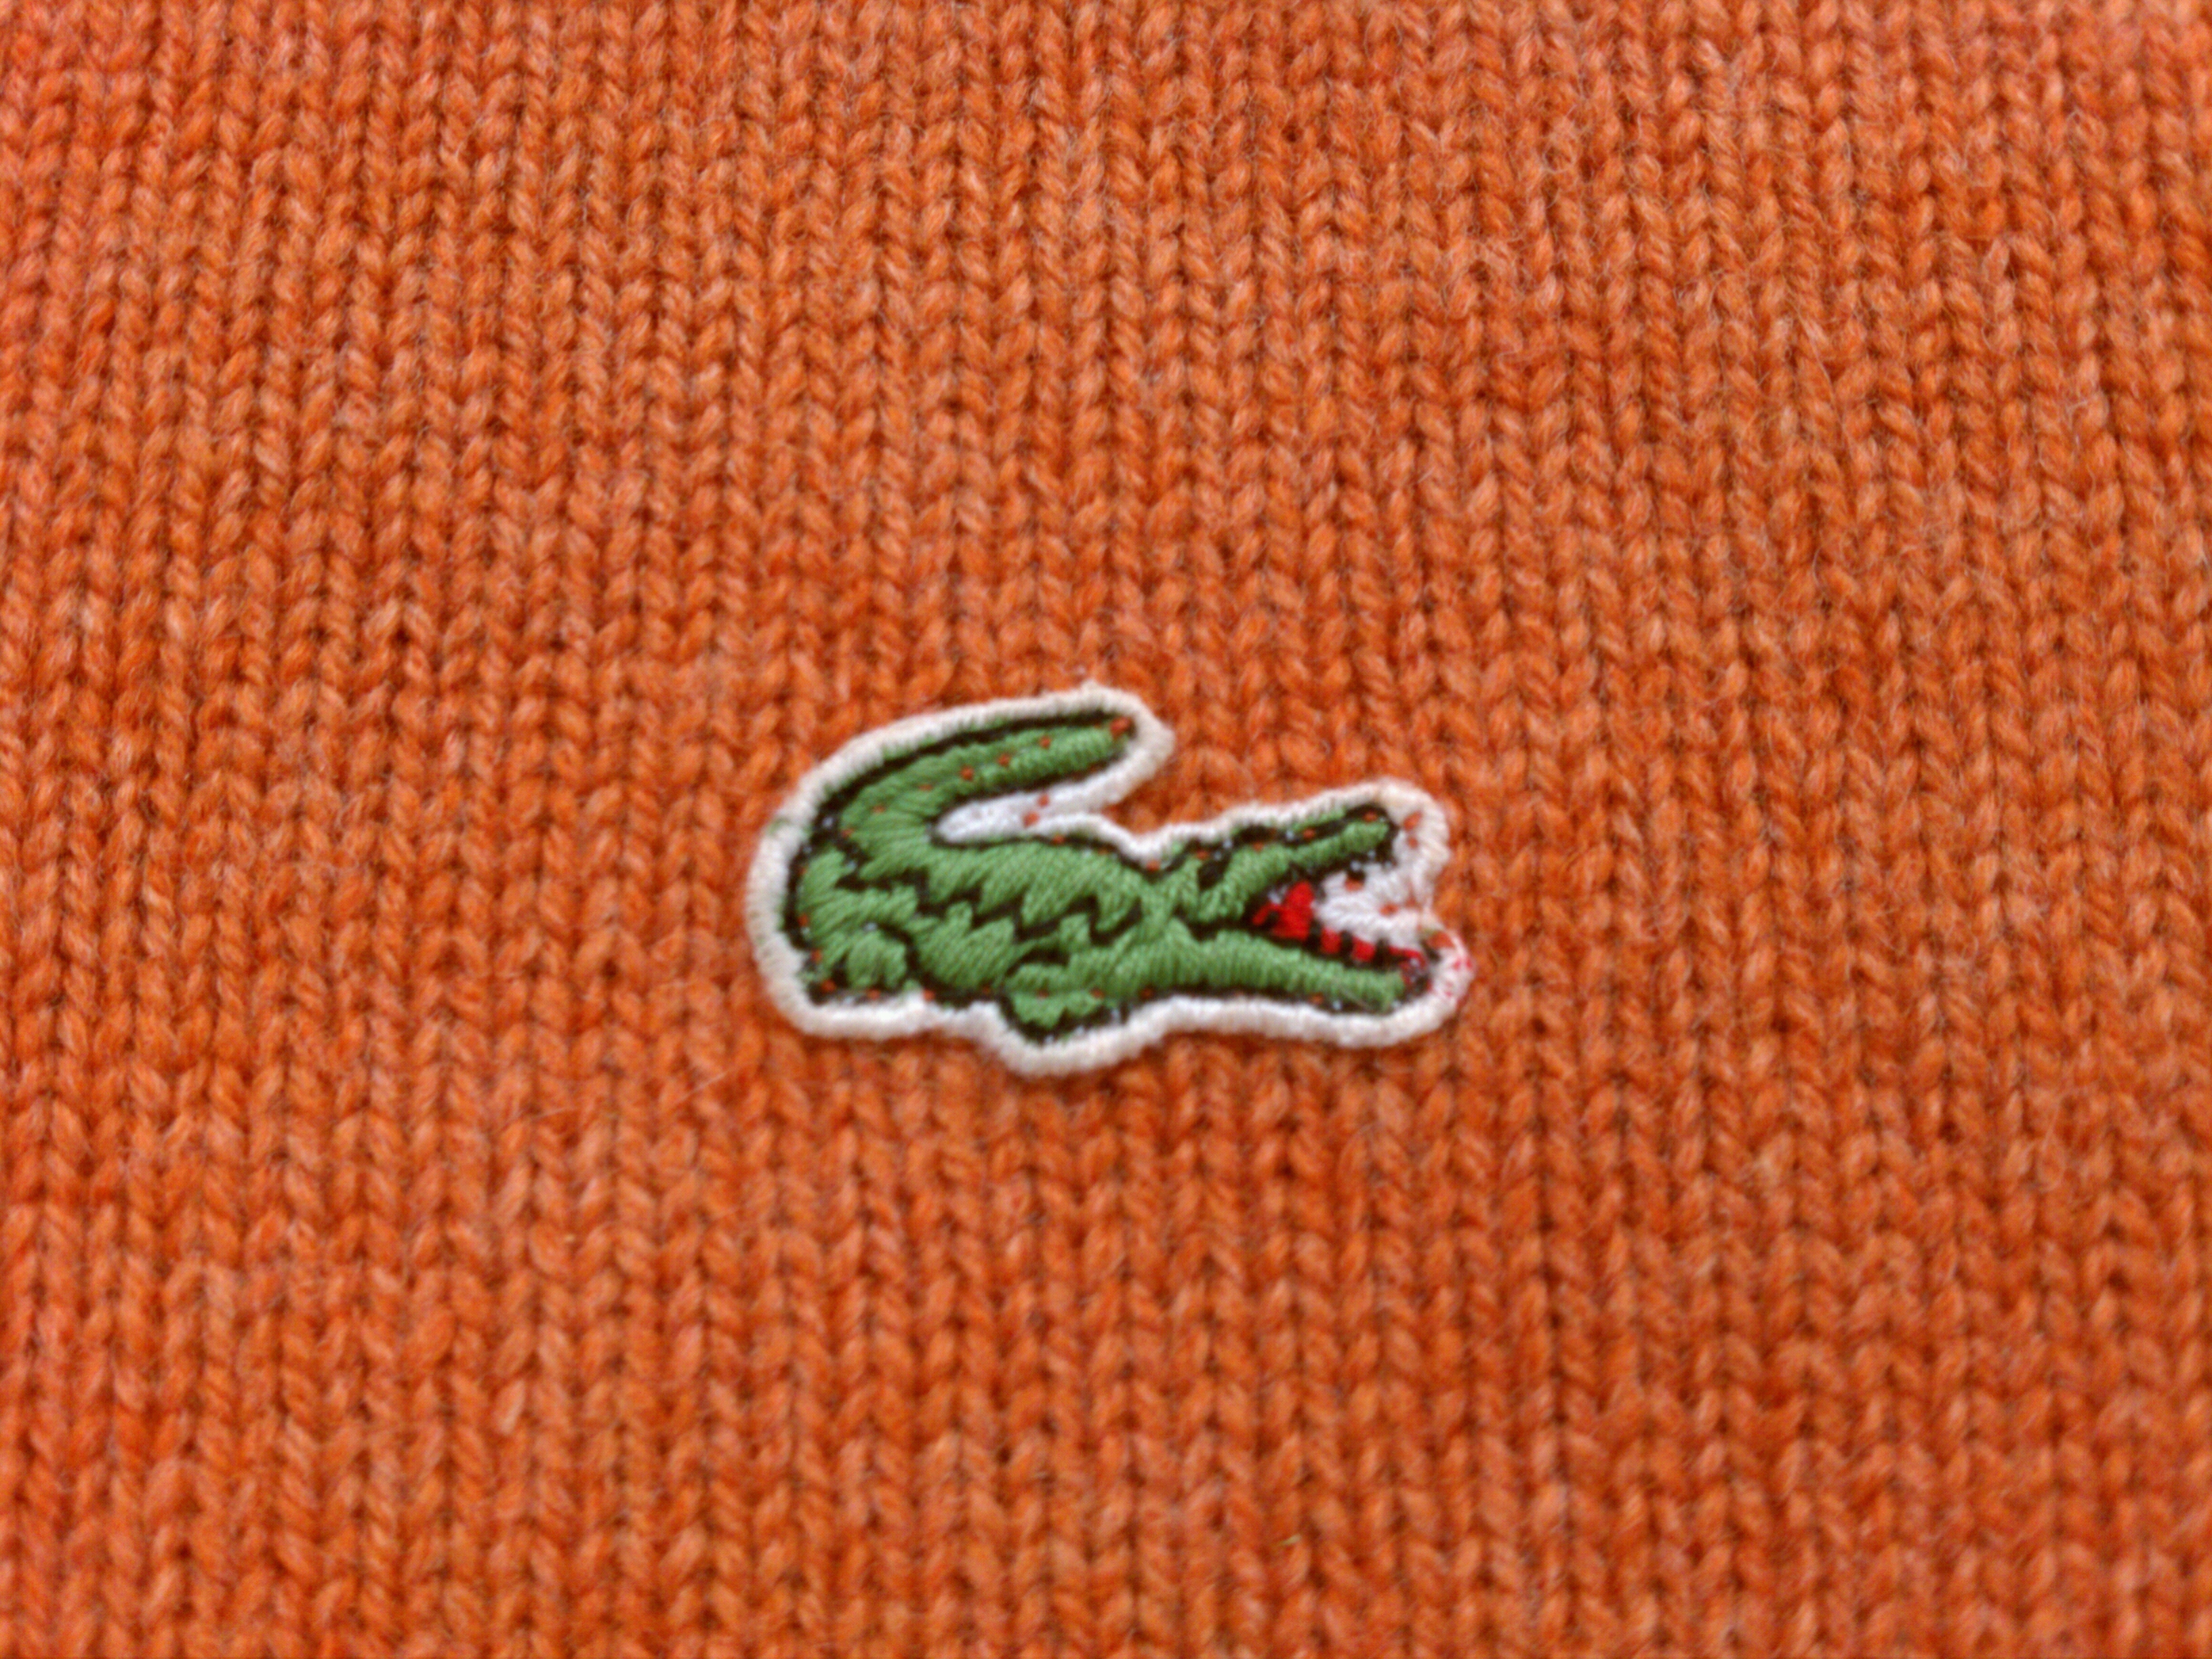 alligator logo clothes